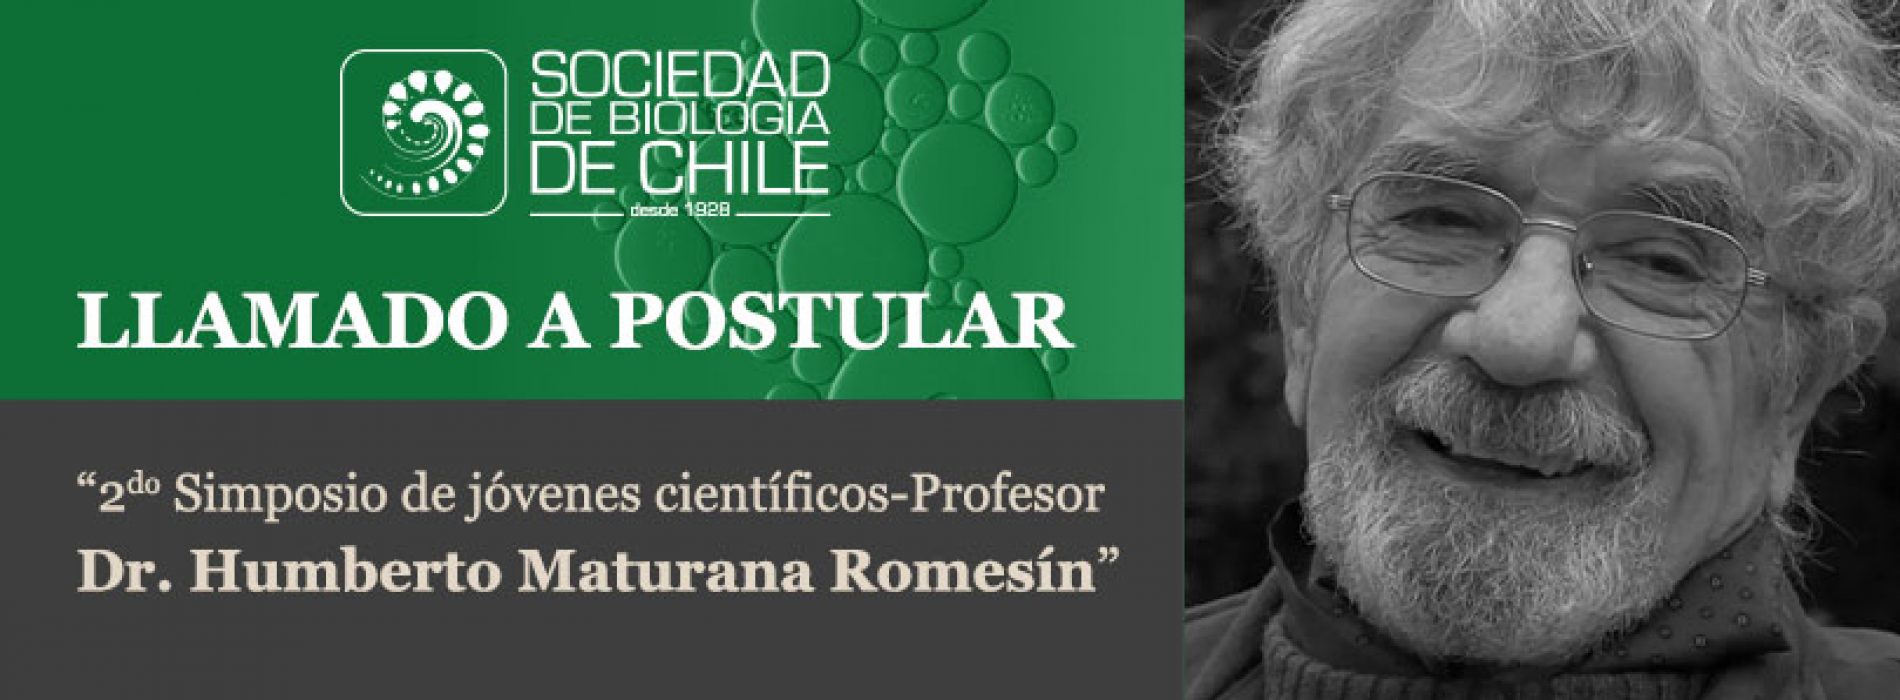 Llamado a postular “2do Simposio de jóvenes científicos-Profesor Dr. Humberto Maturana Romesín”